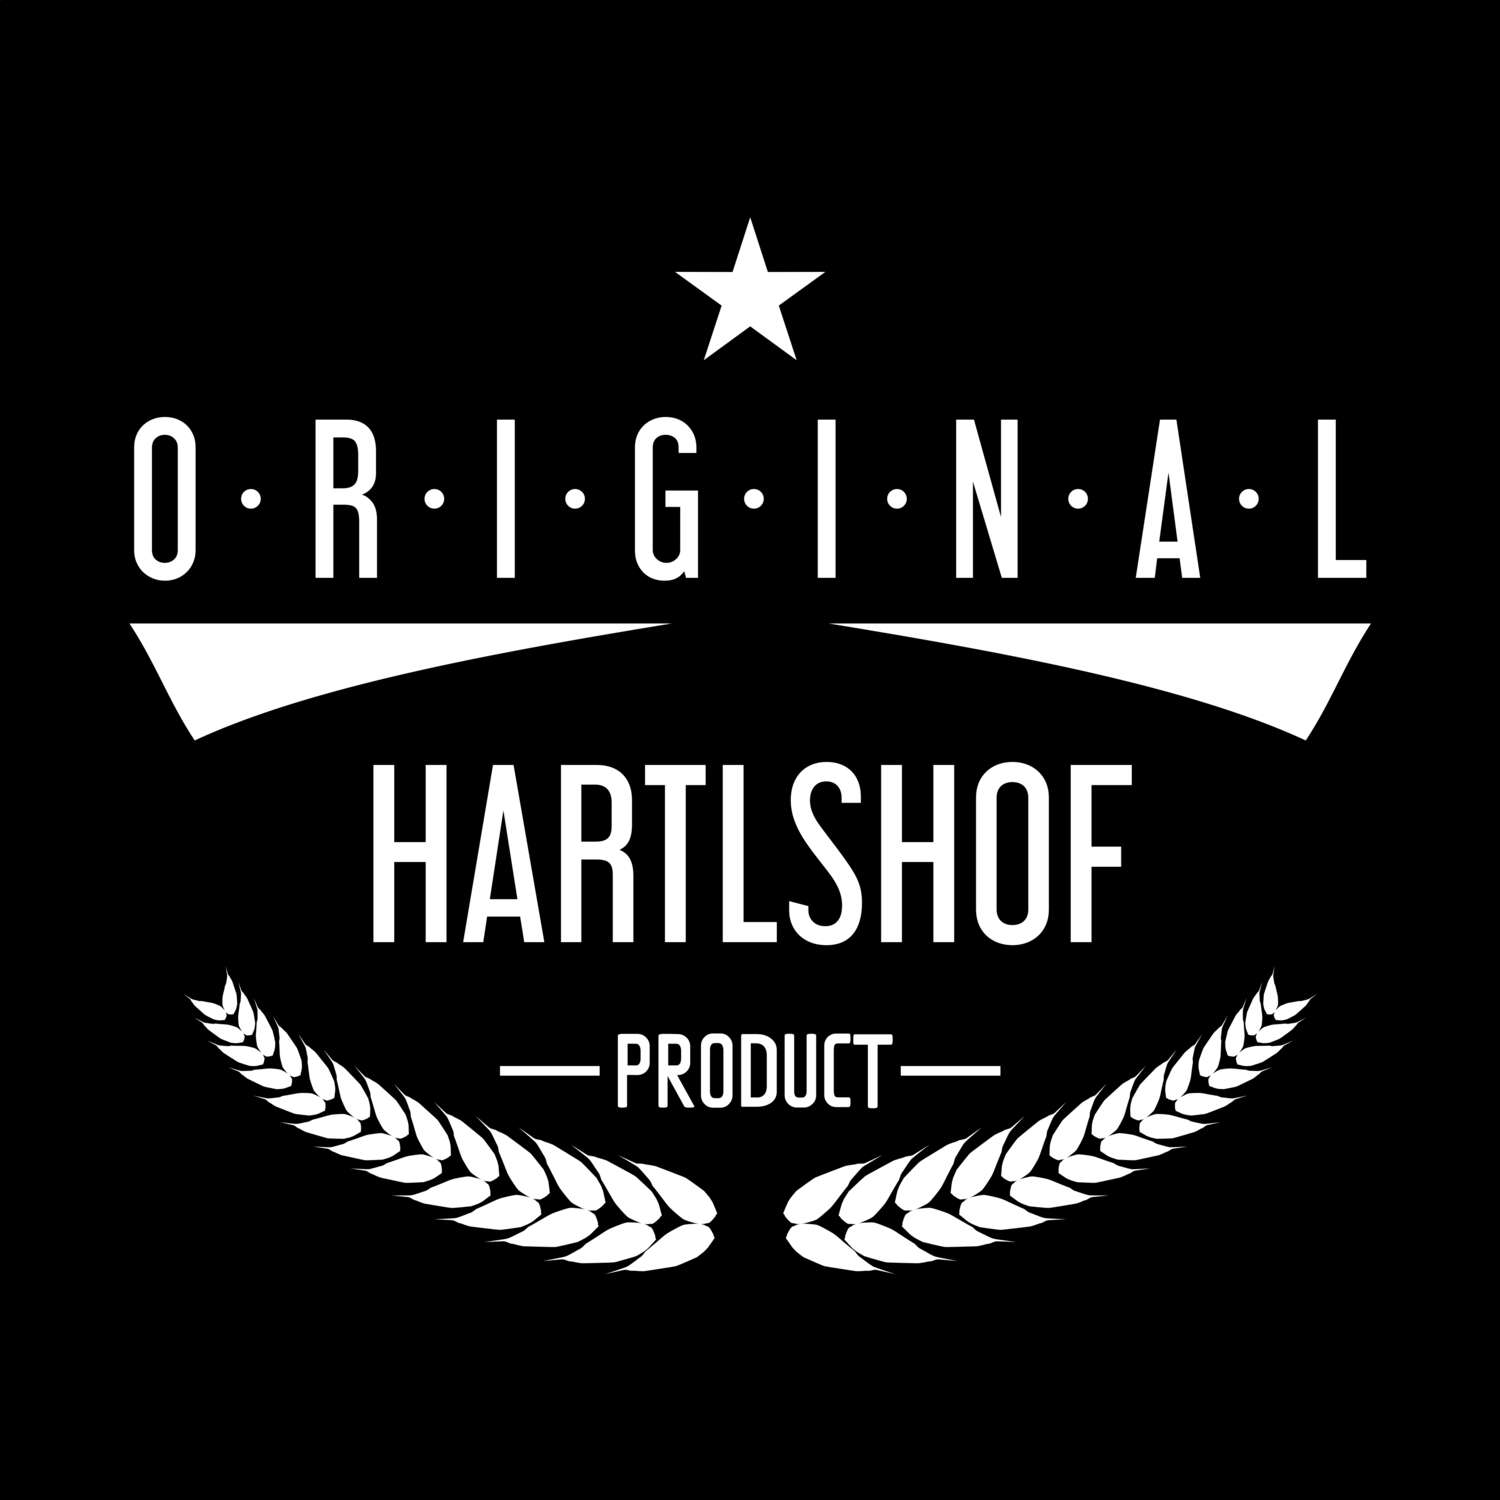 Hartlshof T-Shirt »Original Product«